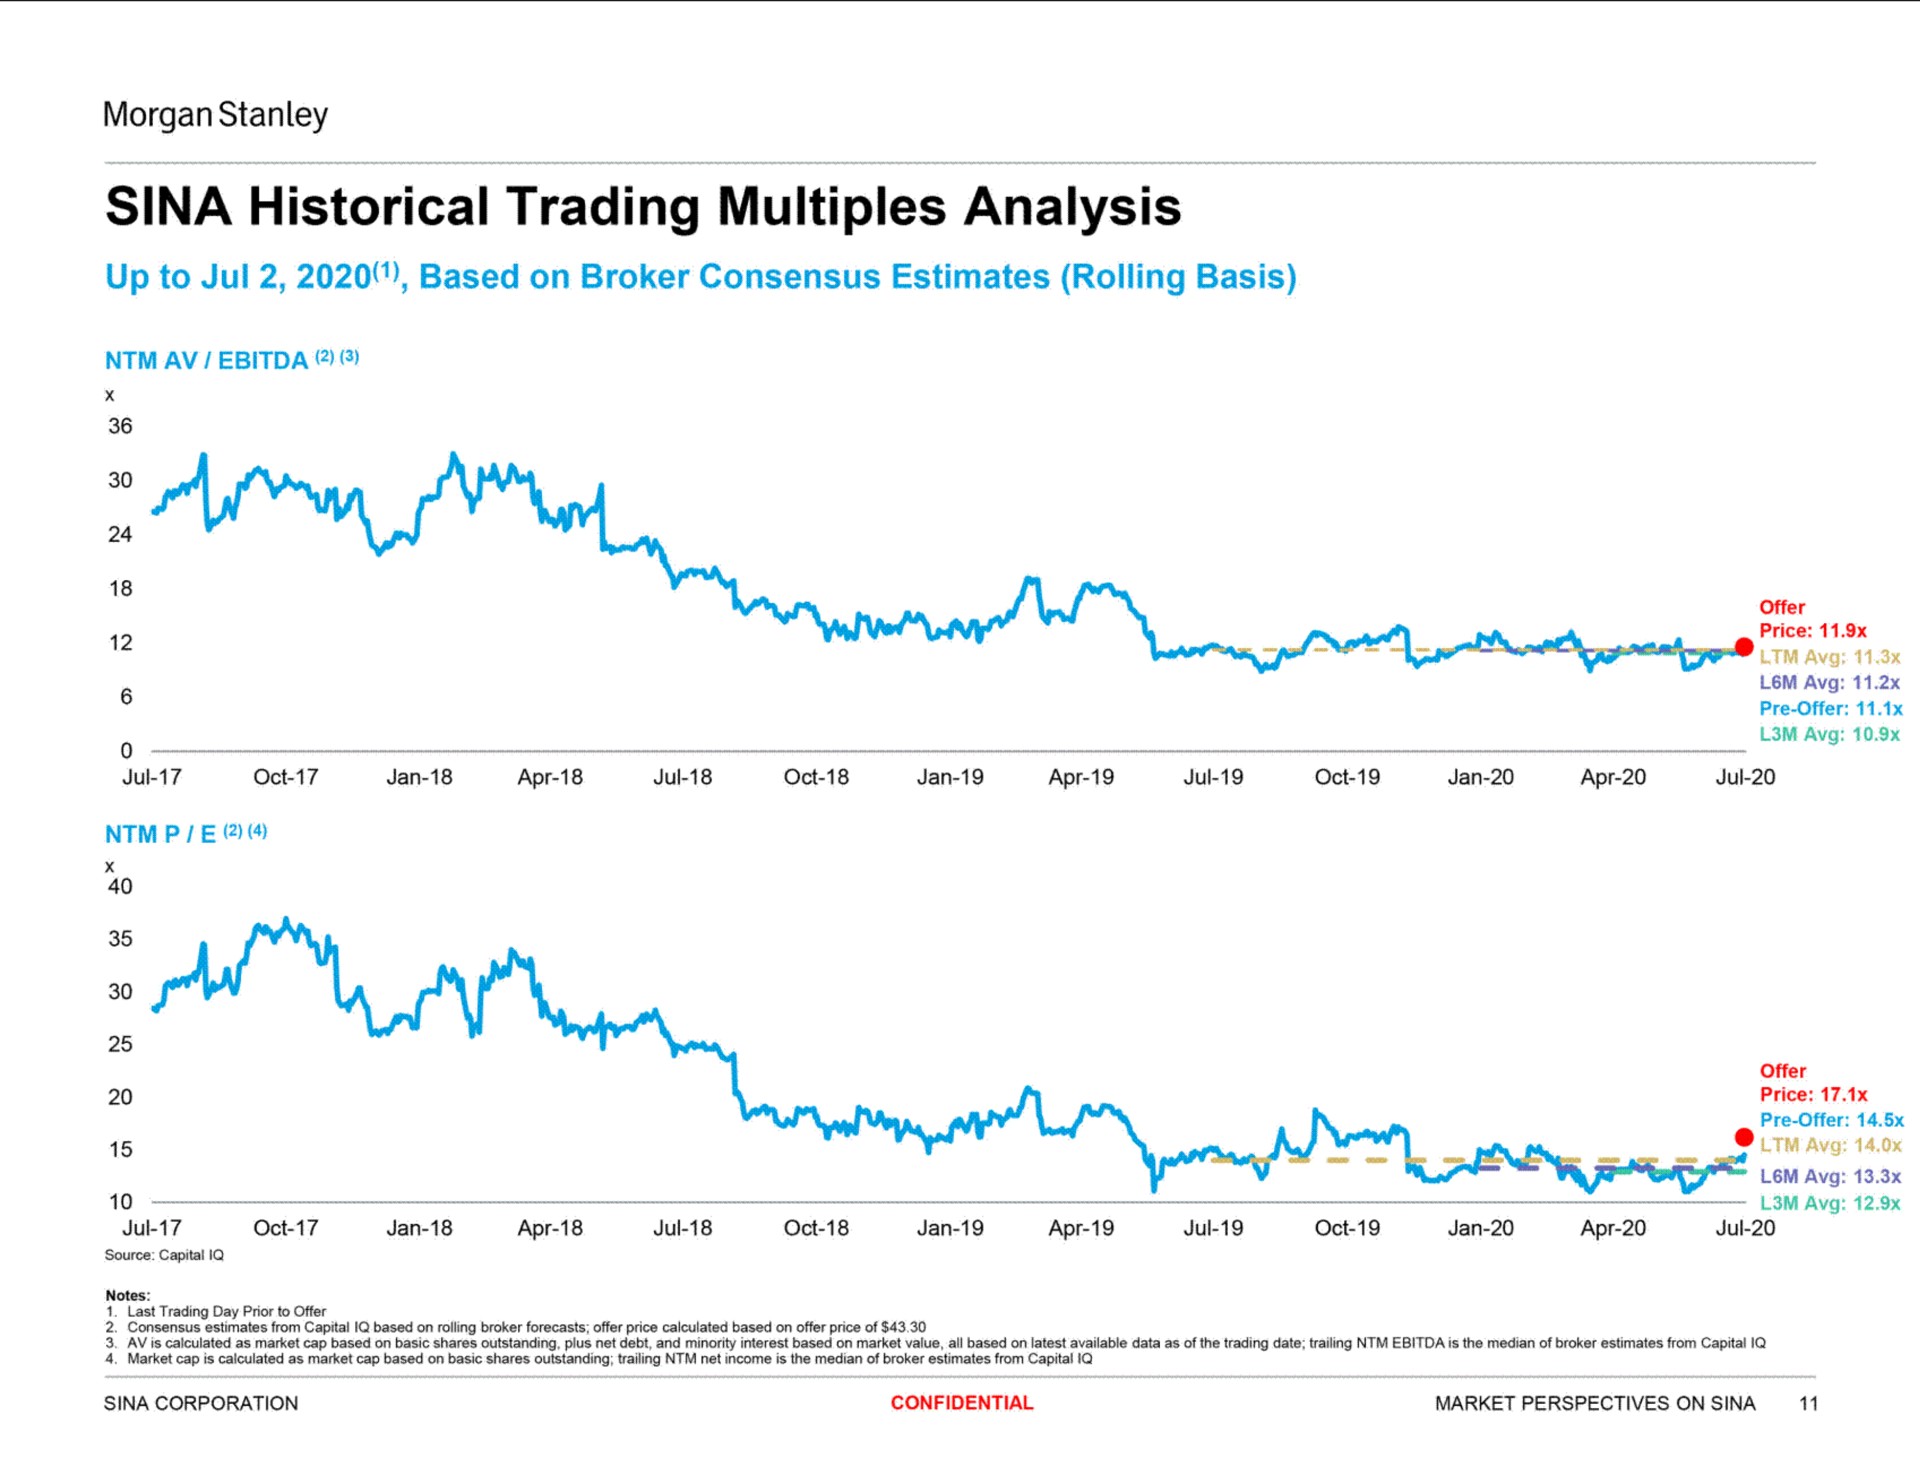 sina historical trading multiples analysis | Morgan Stanley